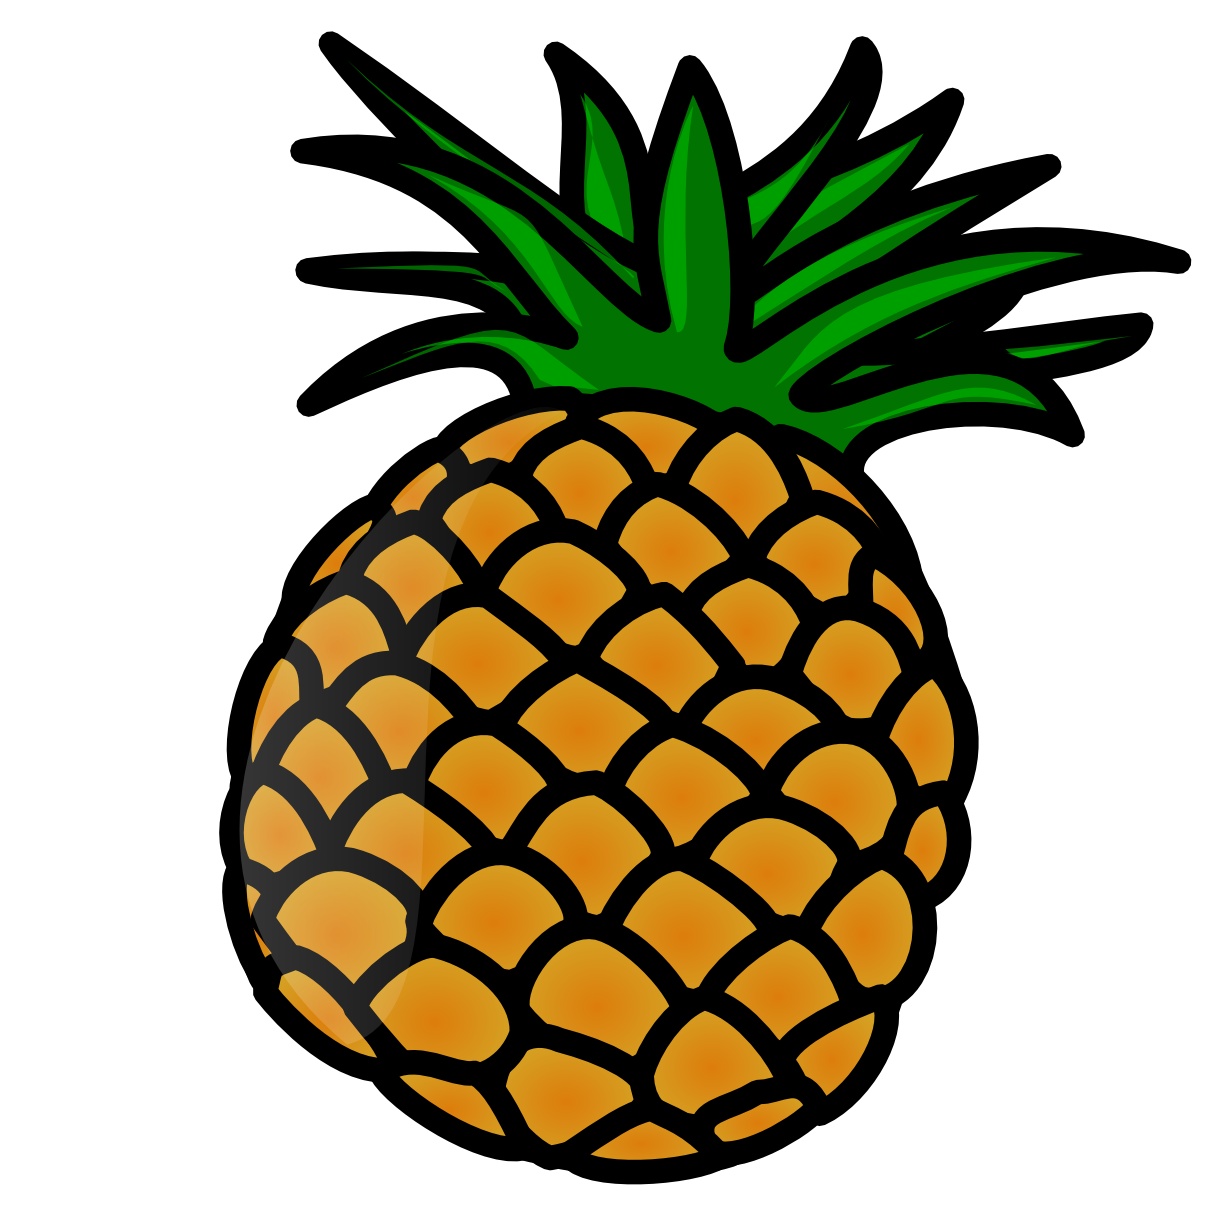 Download Cartoon Pineapple Clip Art HQ PNG Image FreePNGImg